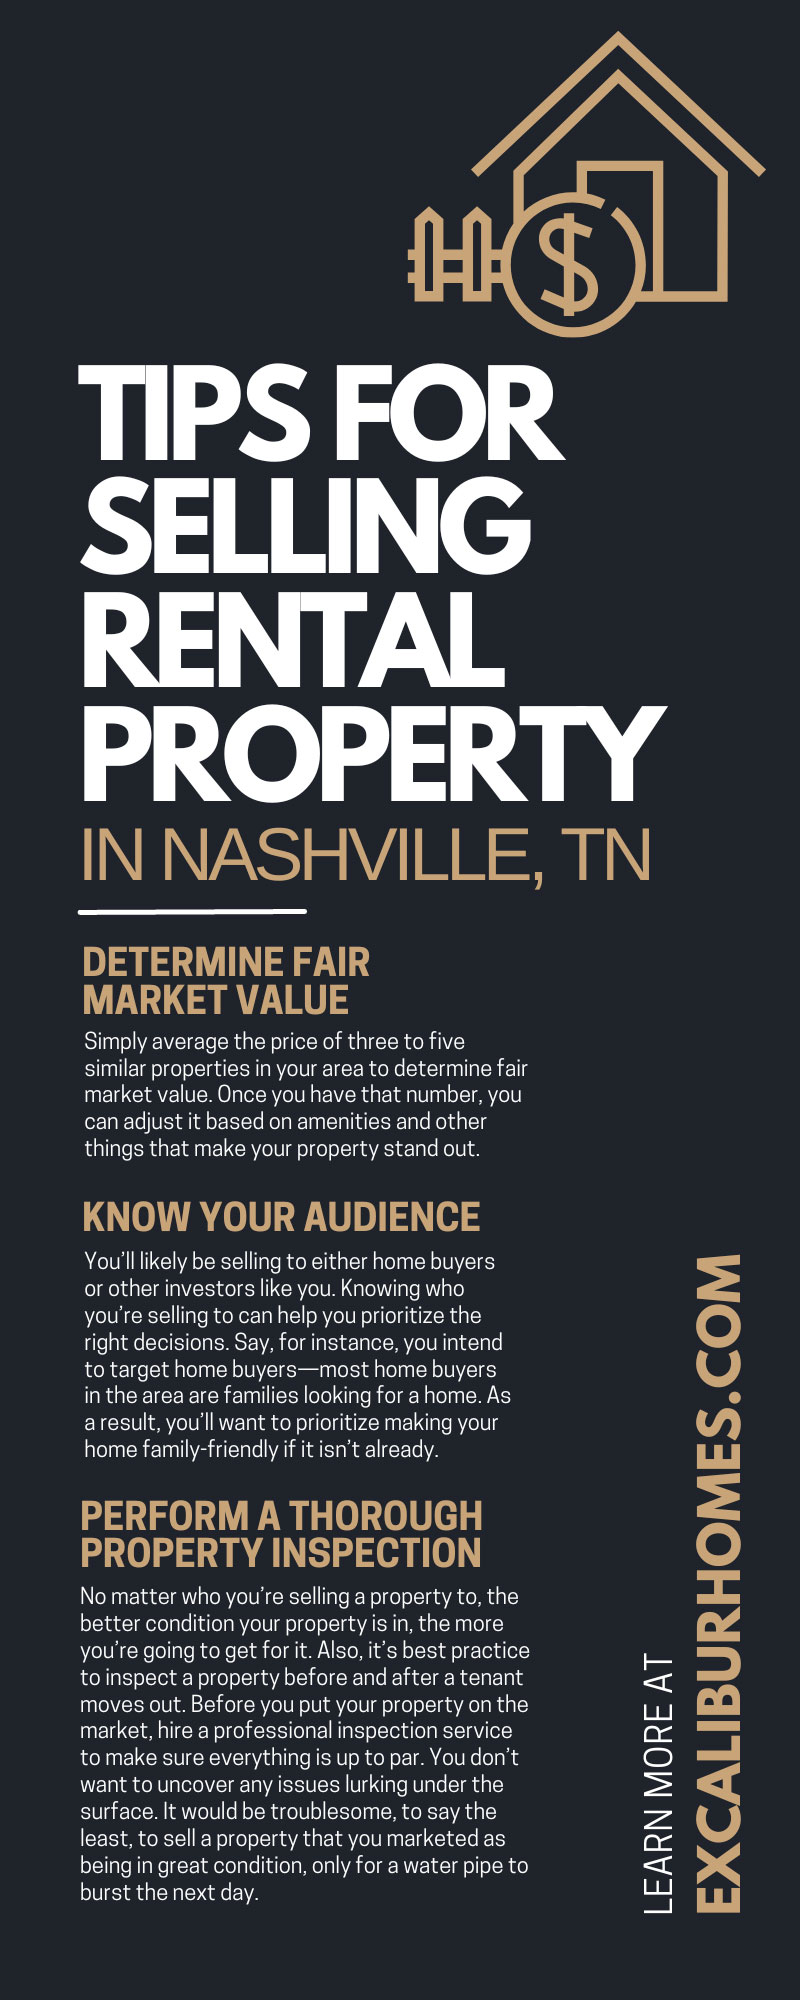 8 Tips for Selling Rental Property in Nashville, TN
